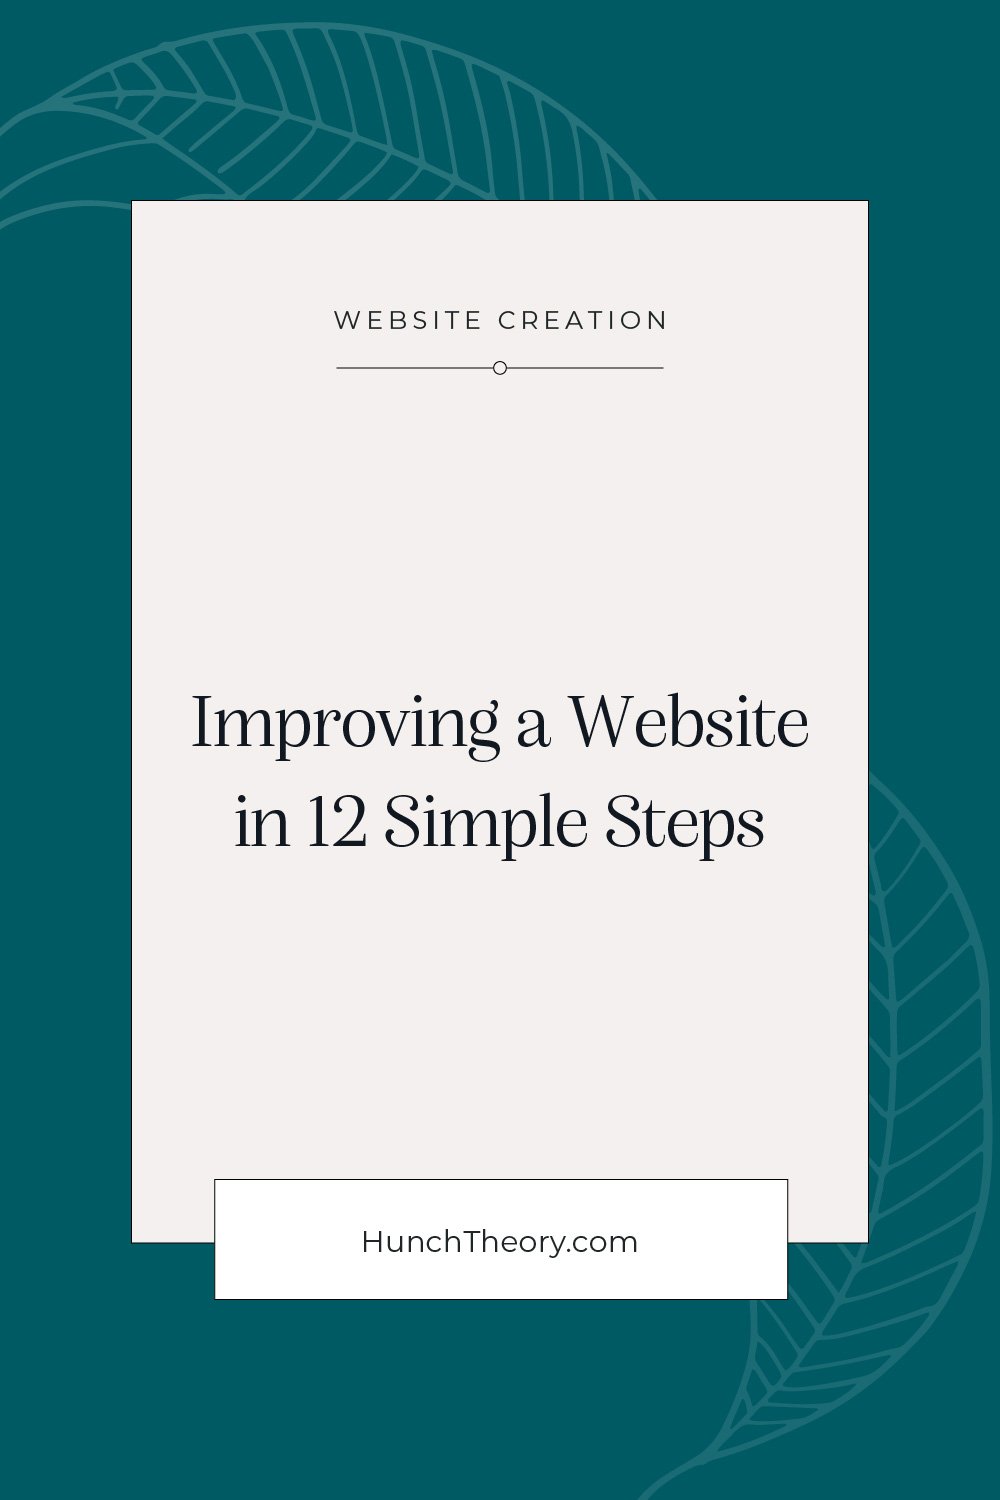 12 steps to Improving a website